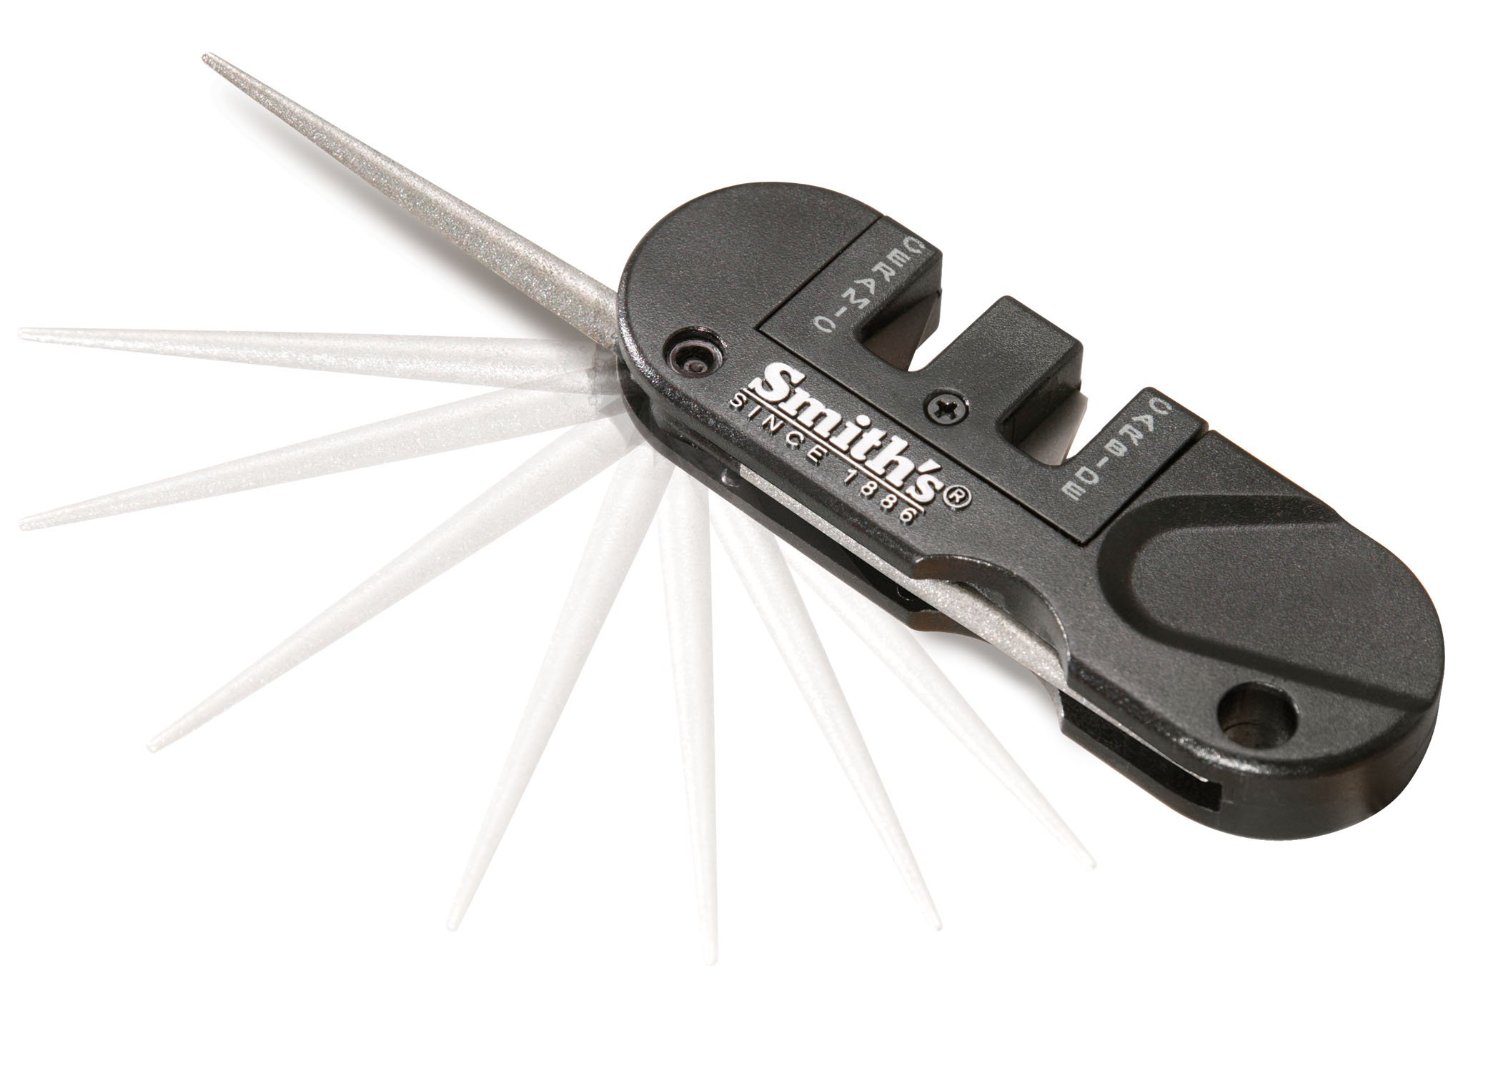 https://somecampingstoves.files.wordpress.com/2014/12/smiths-consumer-products-pp1-pocket-knife-sharpener.jpg